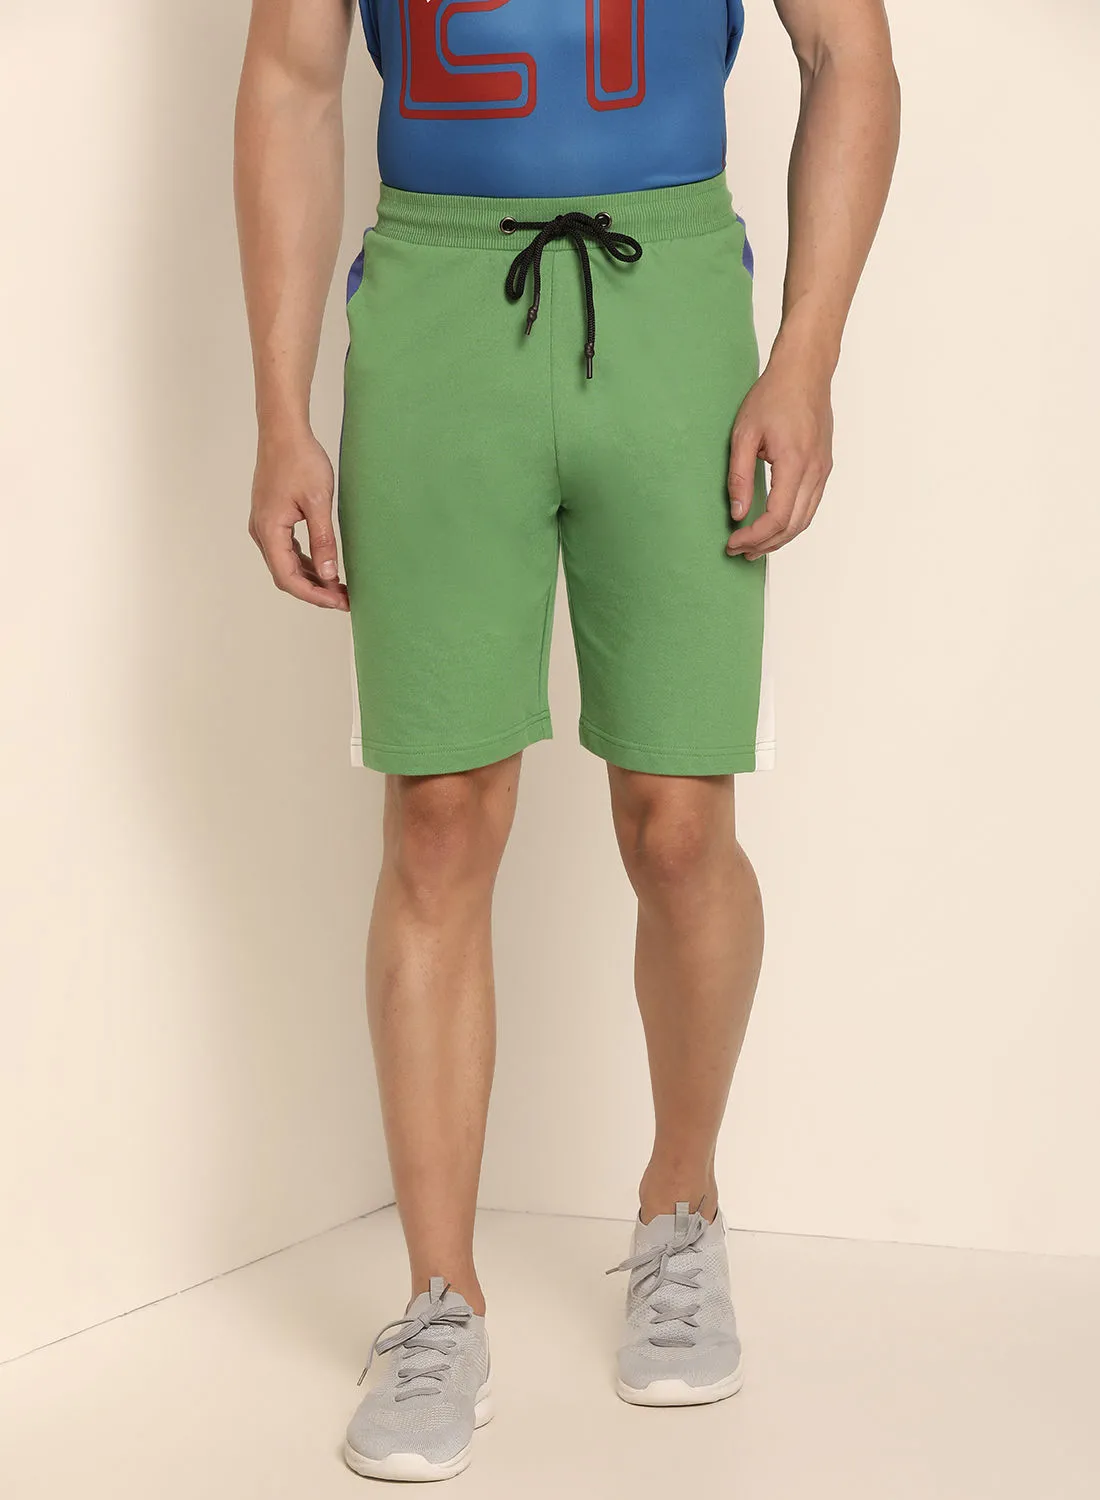 ABOF Contrast Stripe Detail Elastic Waistband Drawstring Shorts Green/White/Blue